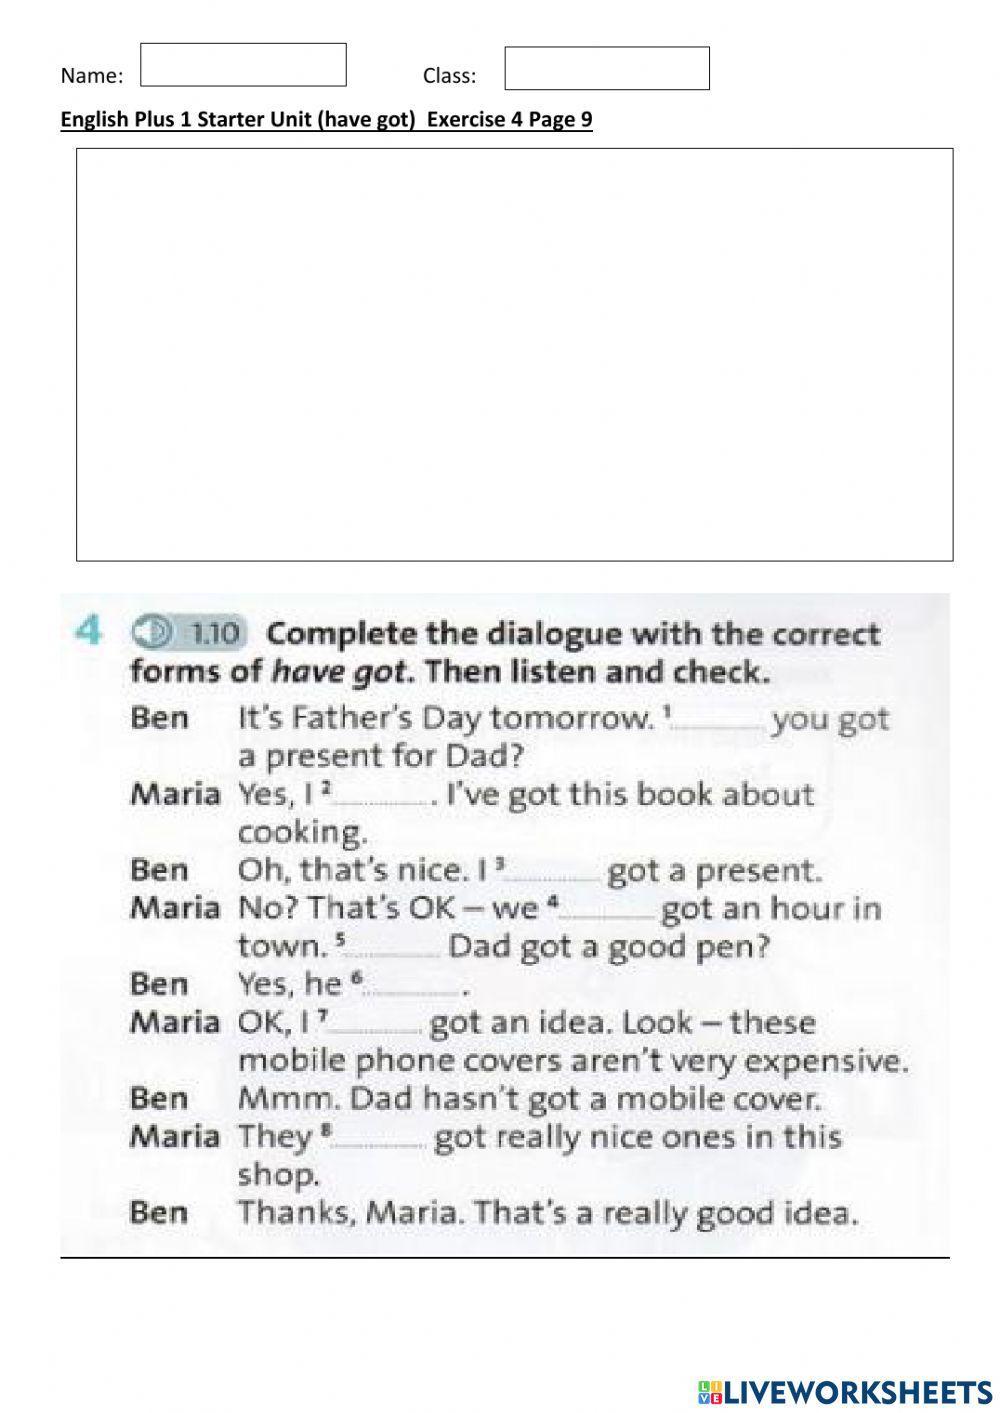 English Plus 1 Starter Unit Language Focus Exercise 4 page 9